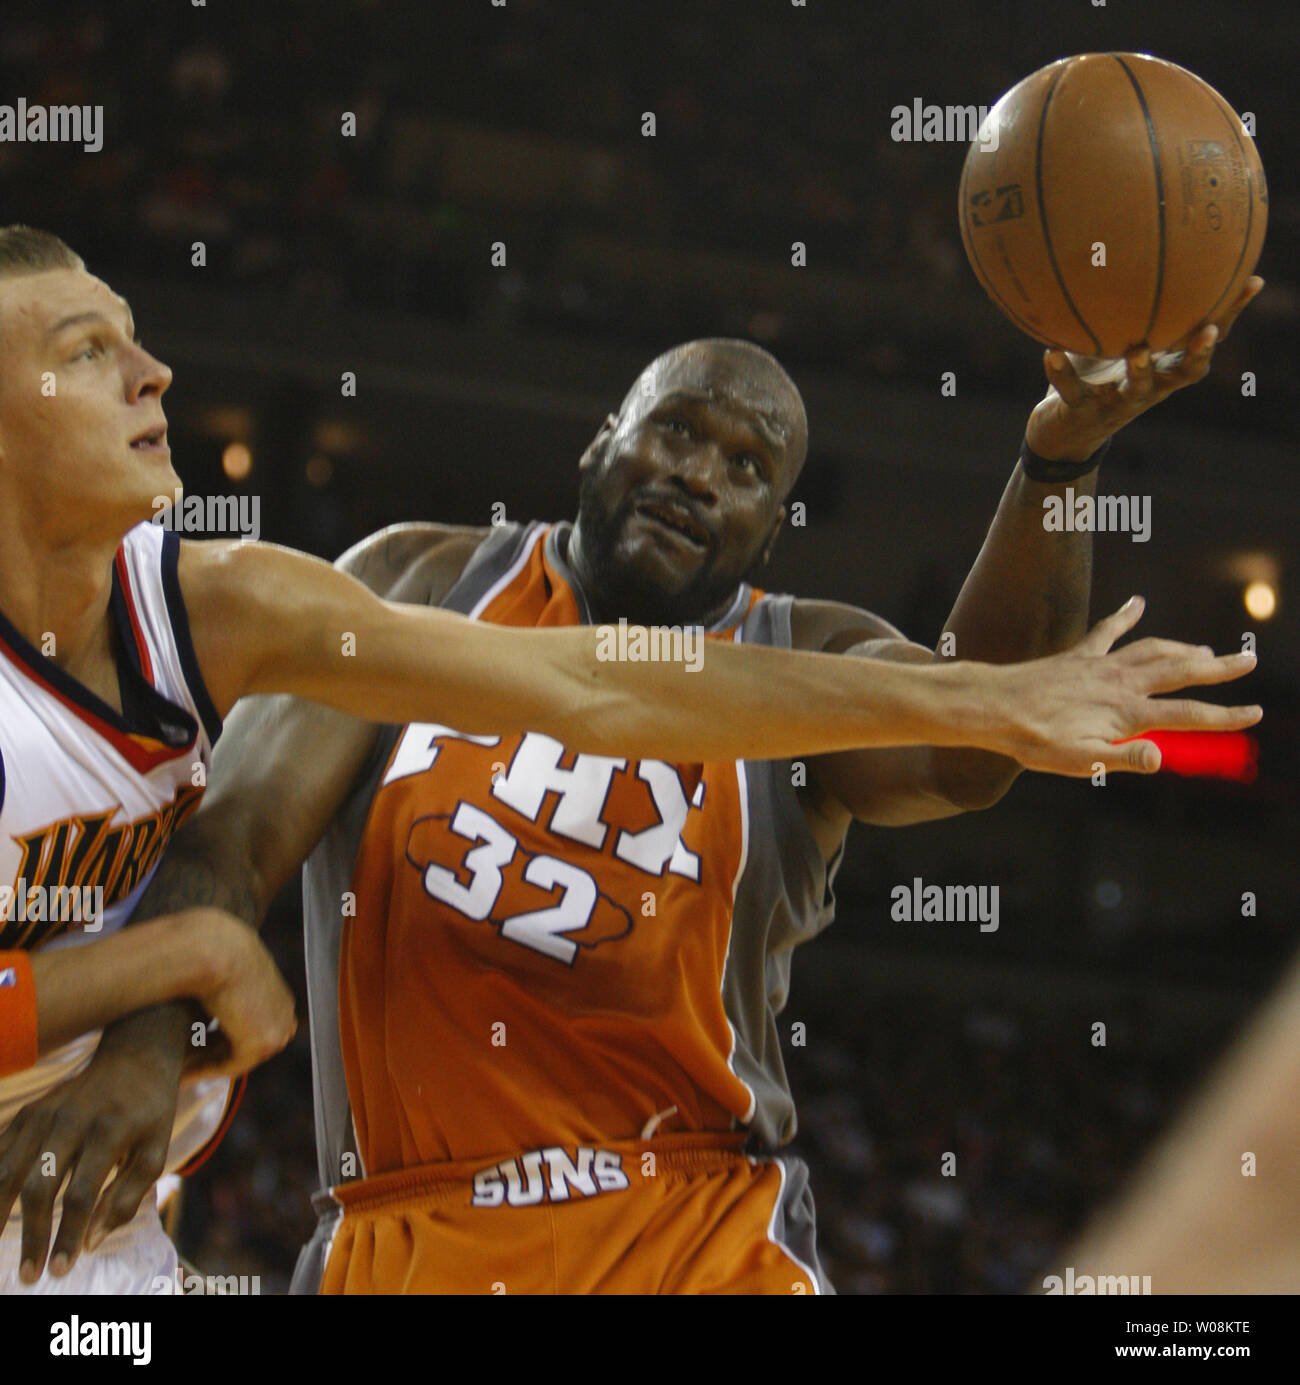 Basketball buzzer beater shot Stock Photo - Alamy